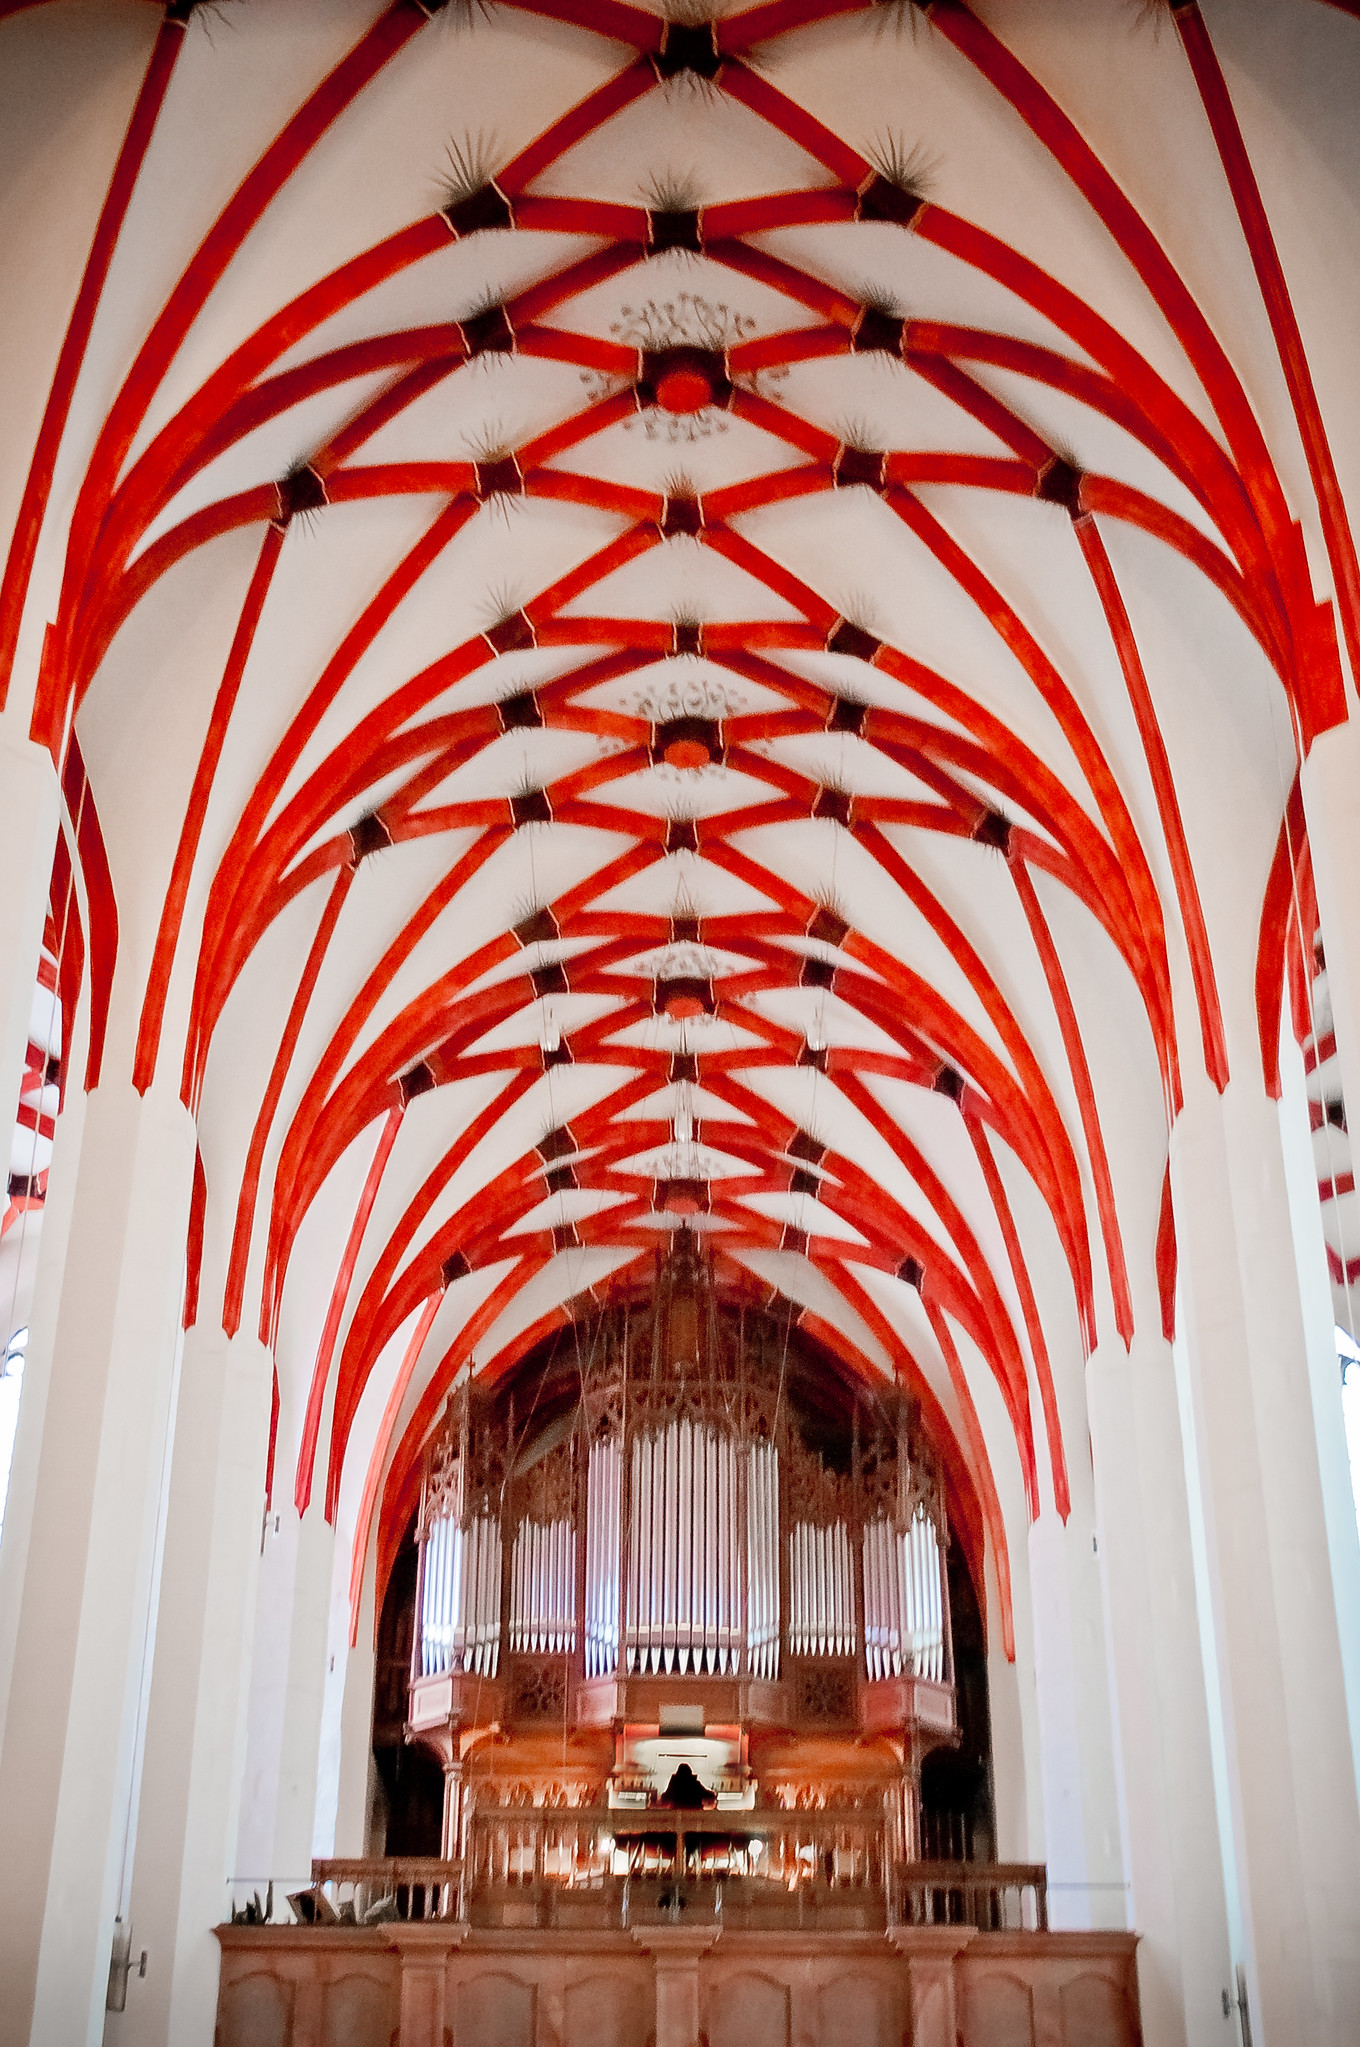 Photograph of the interior of St Thomas' Church, Leipzig